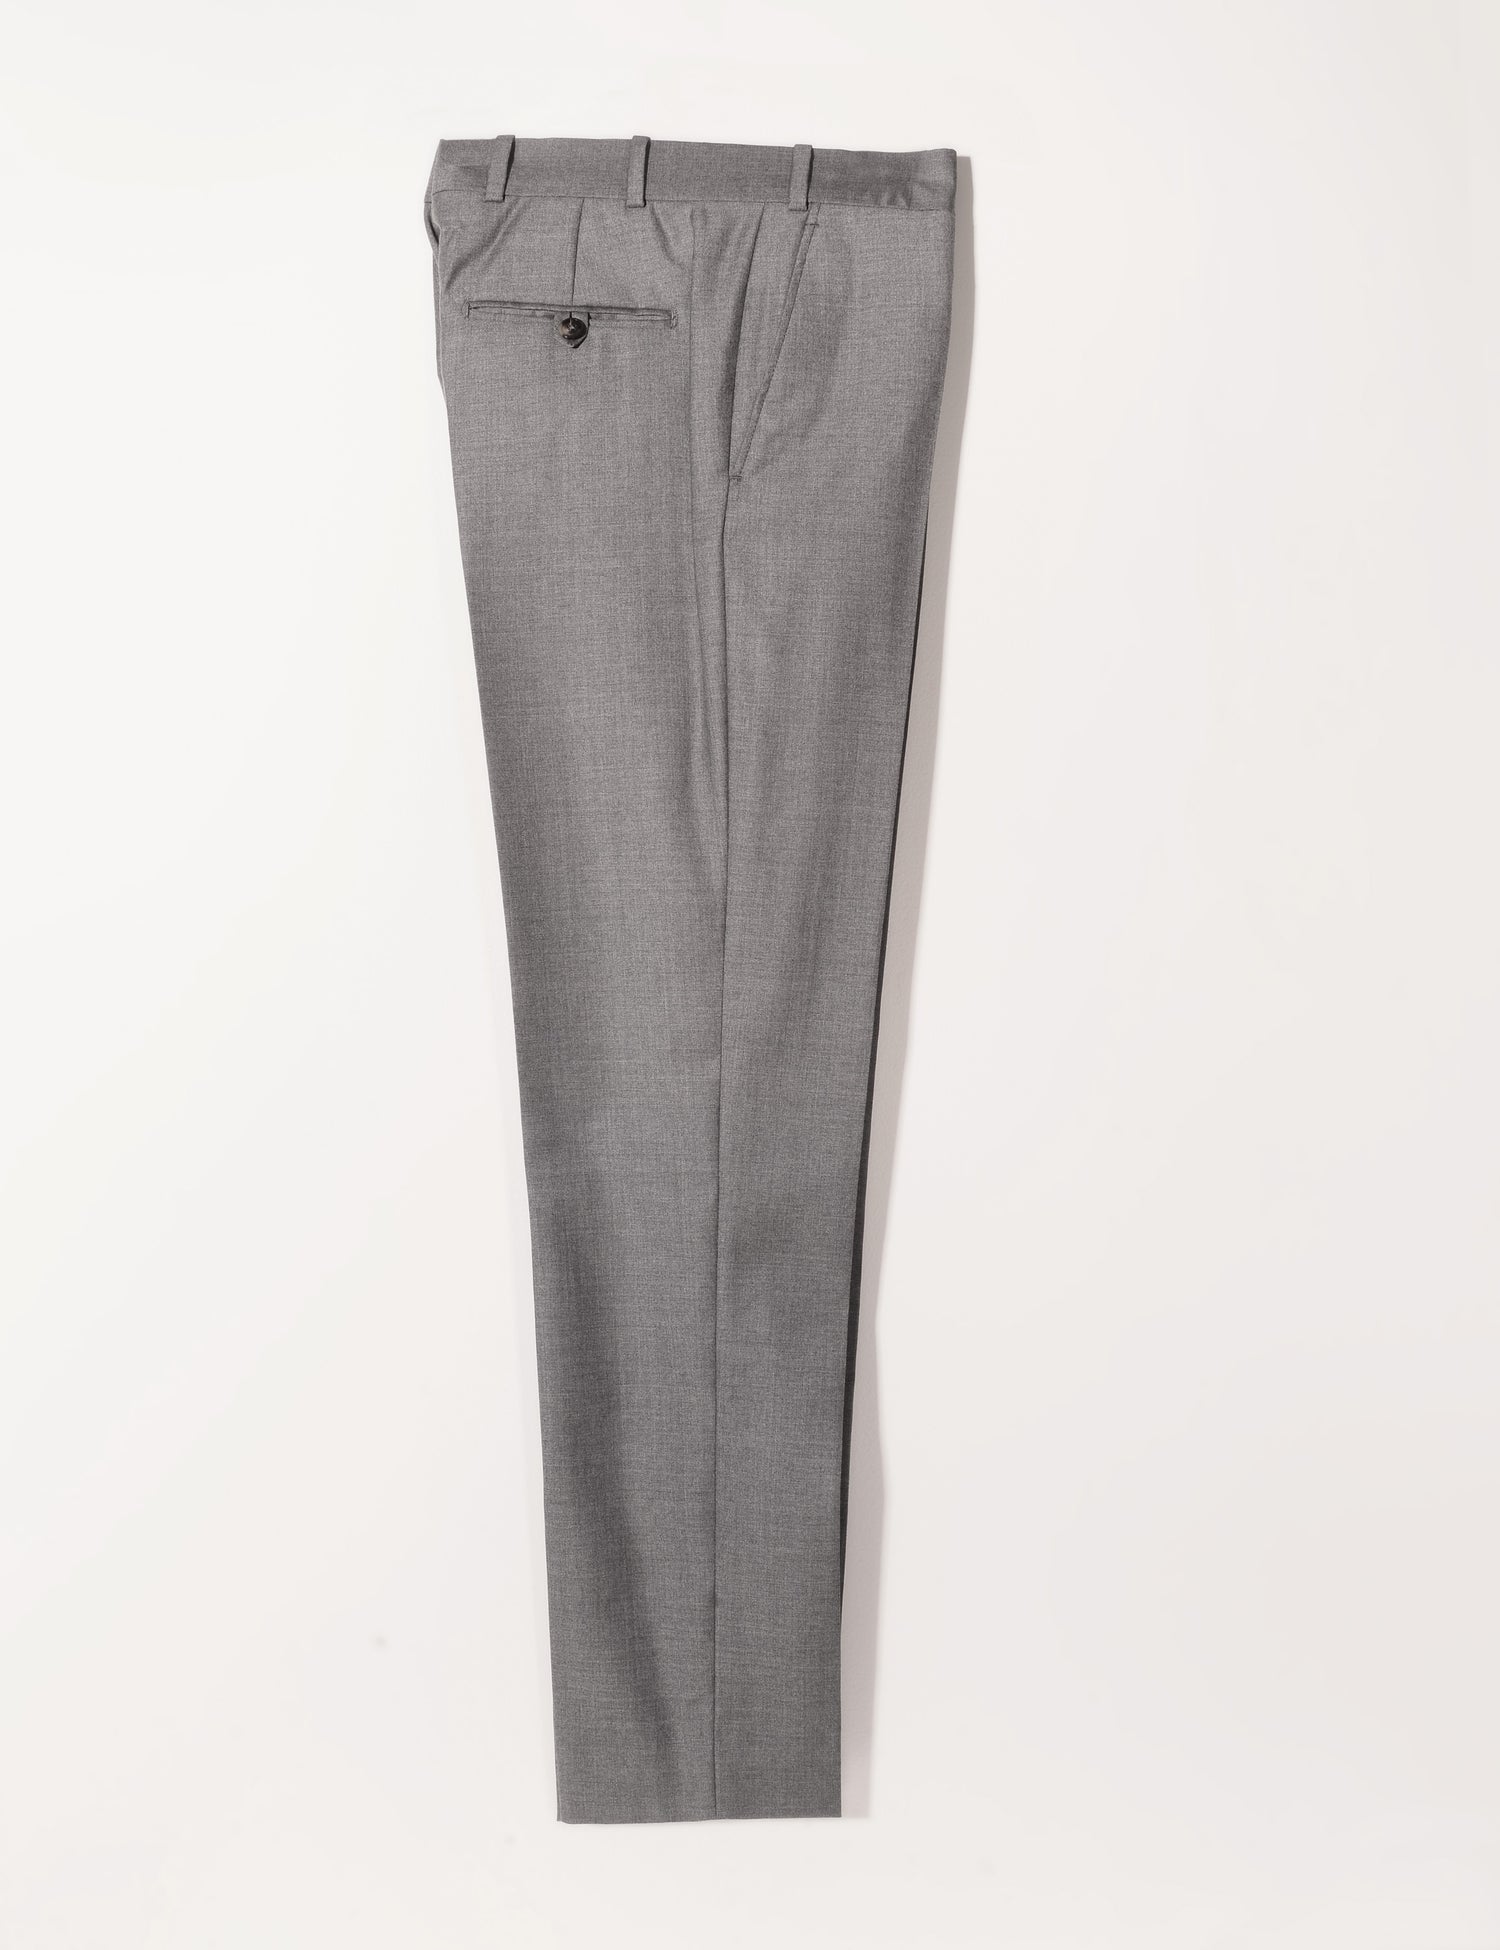 Brooklyn Tailors BKT50 Tailored Trouser in Super 110s Twill - Dove Gray full length flat shot